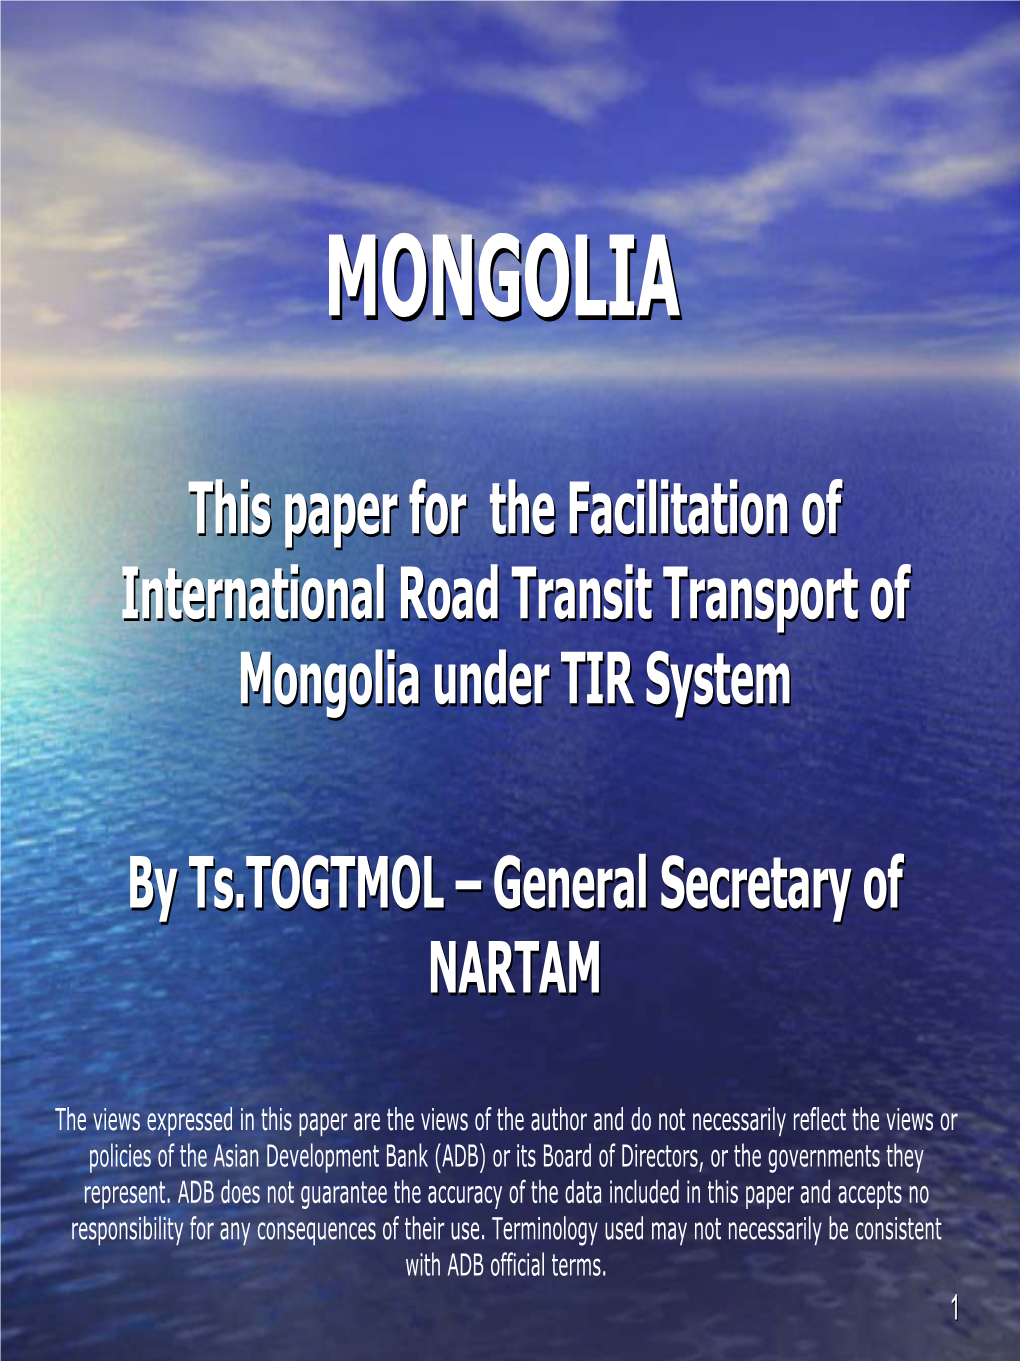 Facilitation of International Road Transit Transport of Mongolia Under TIR System